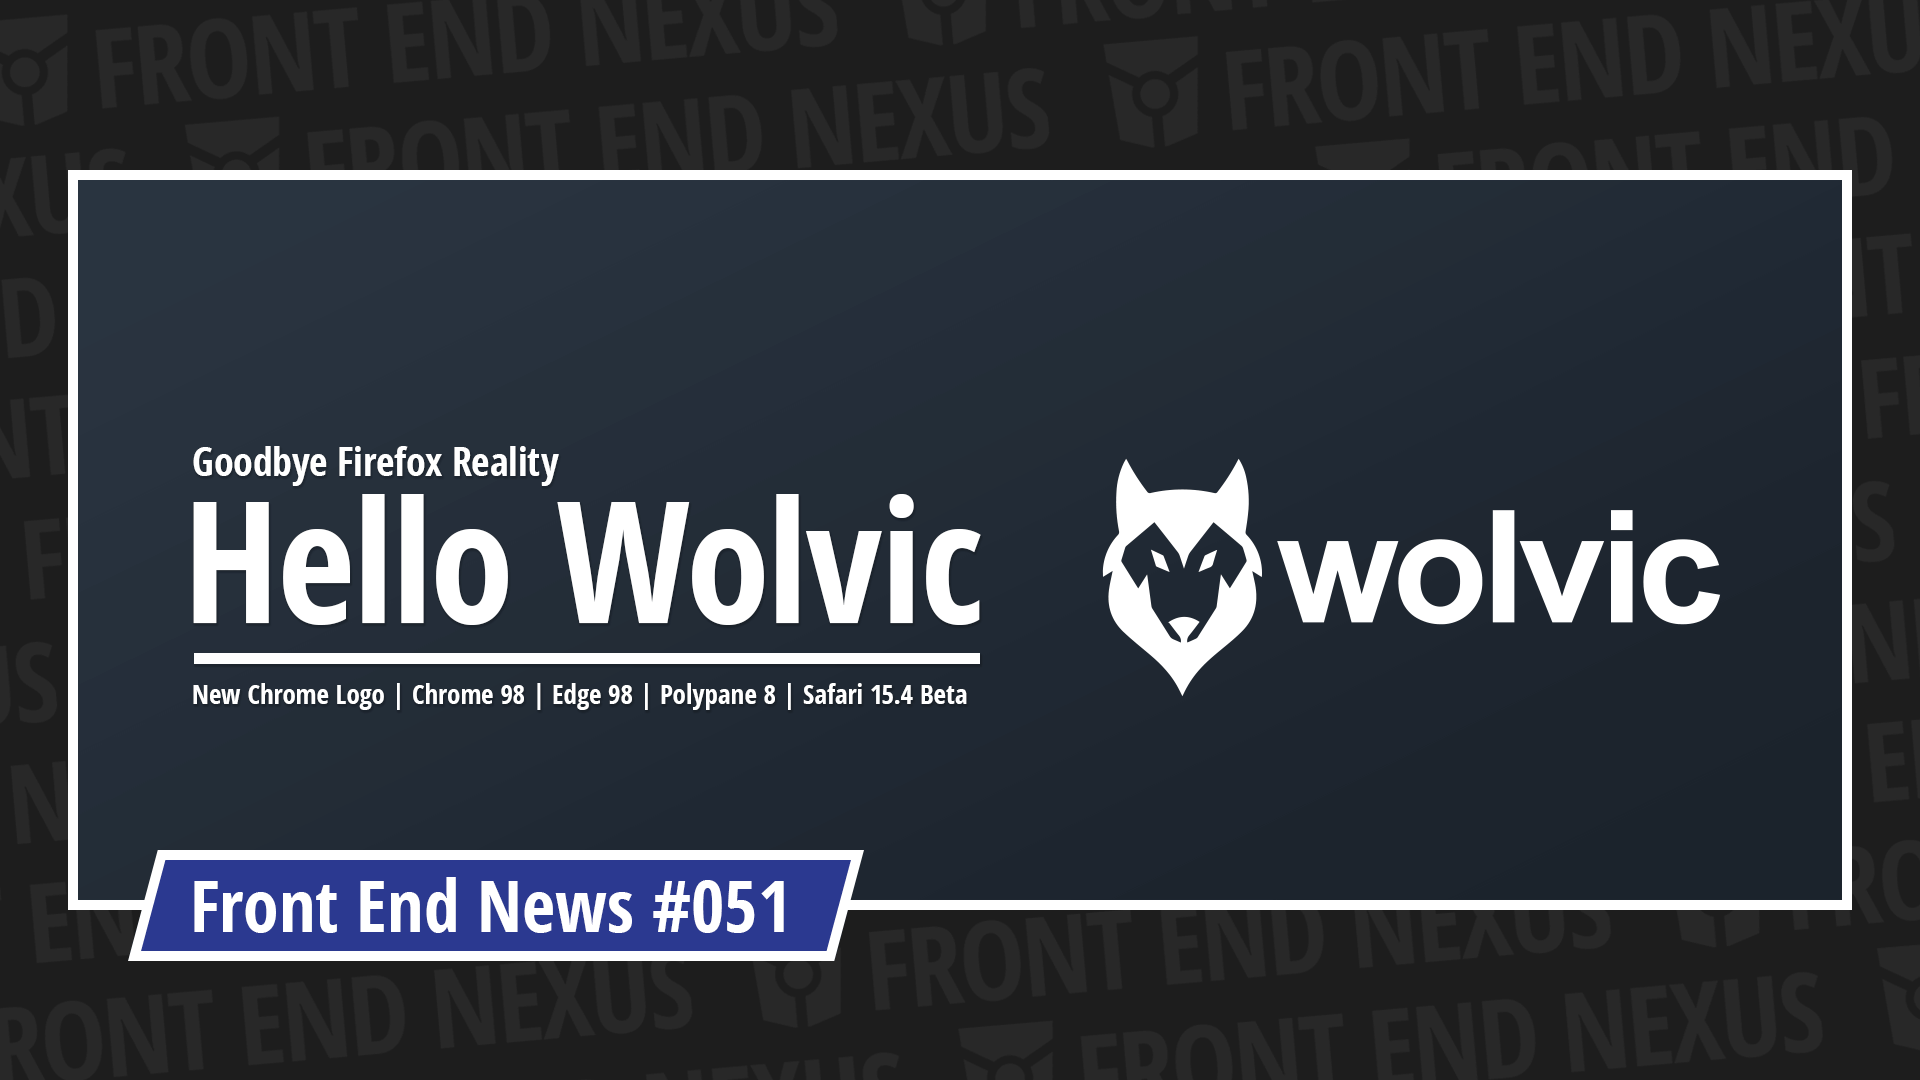 Introducing Wolvic, a New Chrome Logo, Chrome 98, Edge 98, Polypane 8, Safari 15.4 Beta, and more | Front End News #051